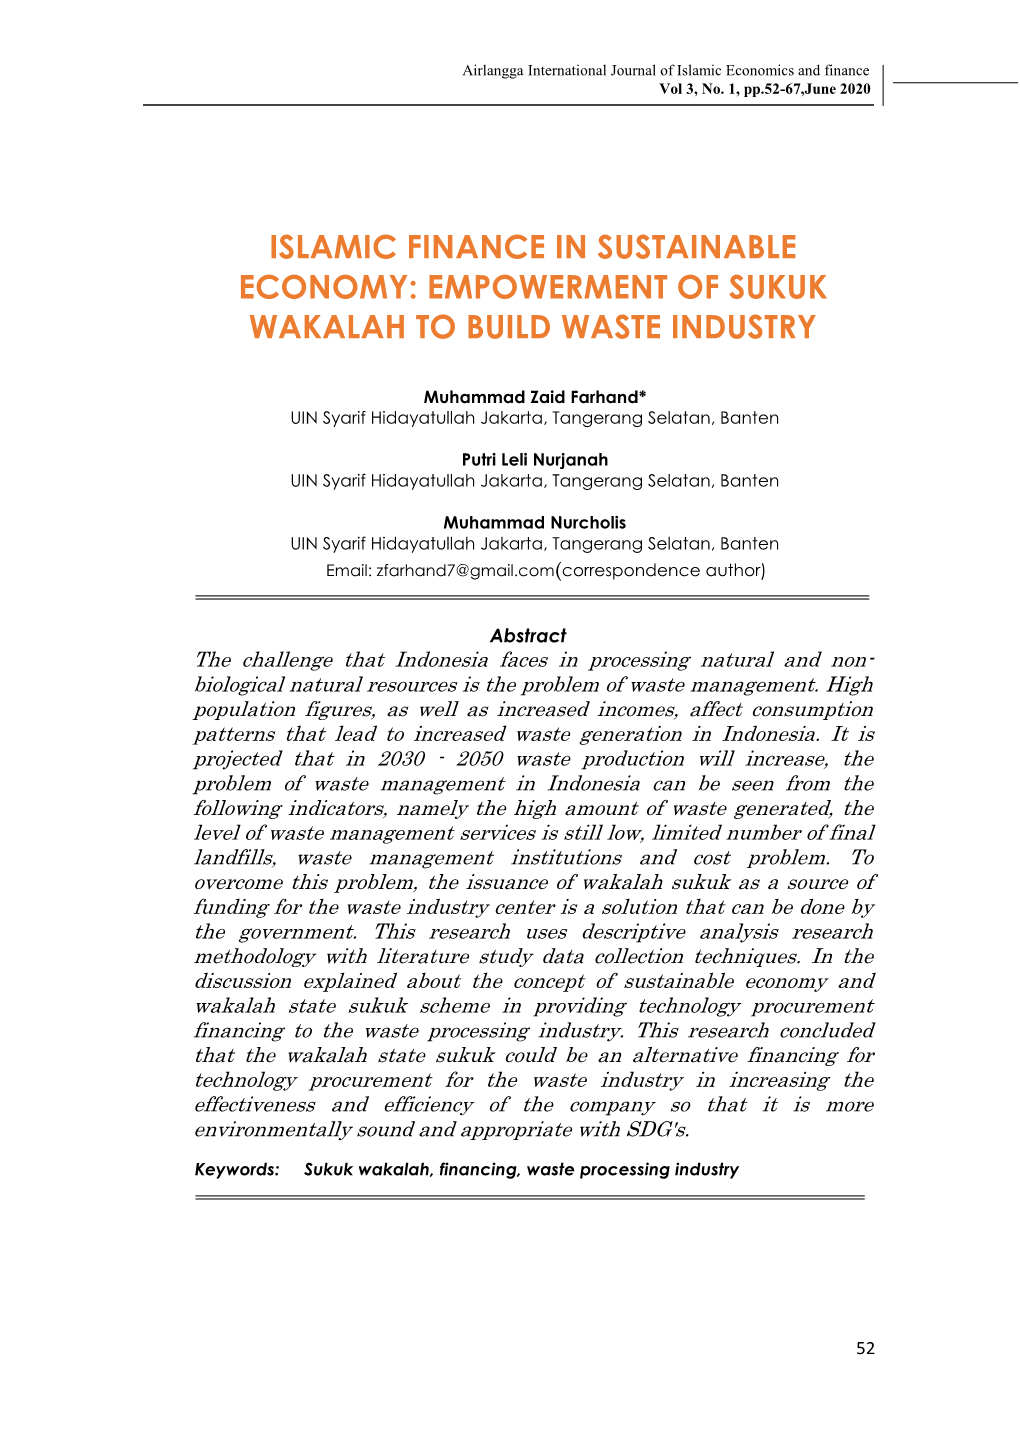 Islamic Finance in Sustainable Economy: Empowerment of Sukuk Wakalah to Build Waste Industry